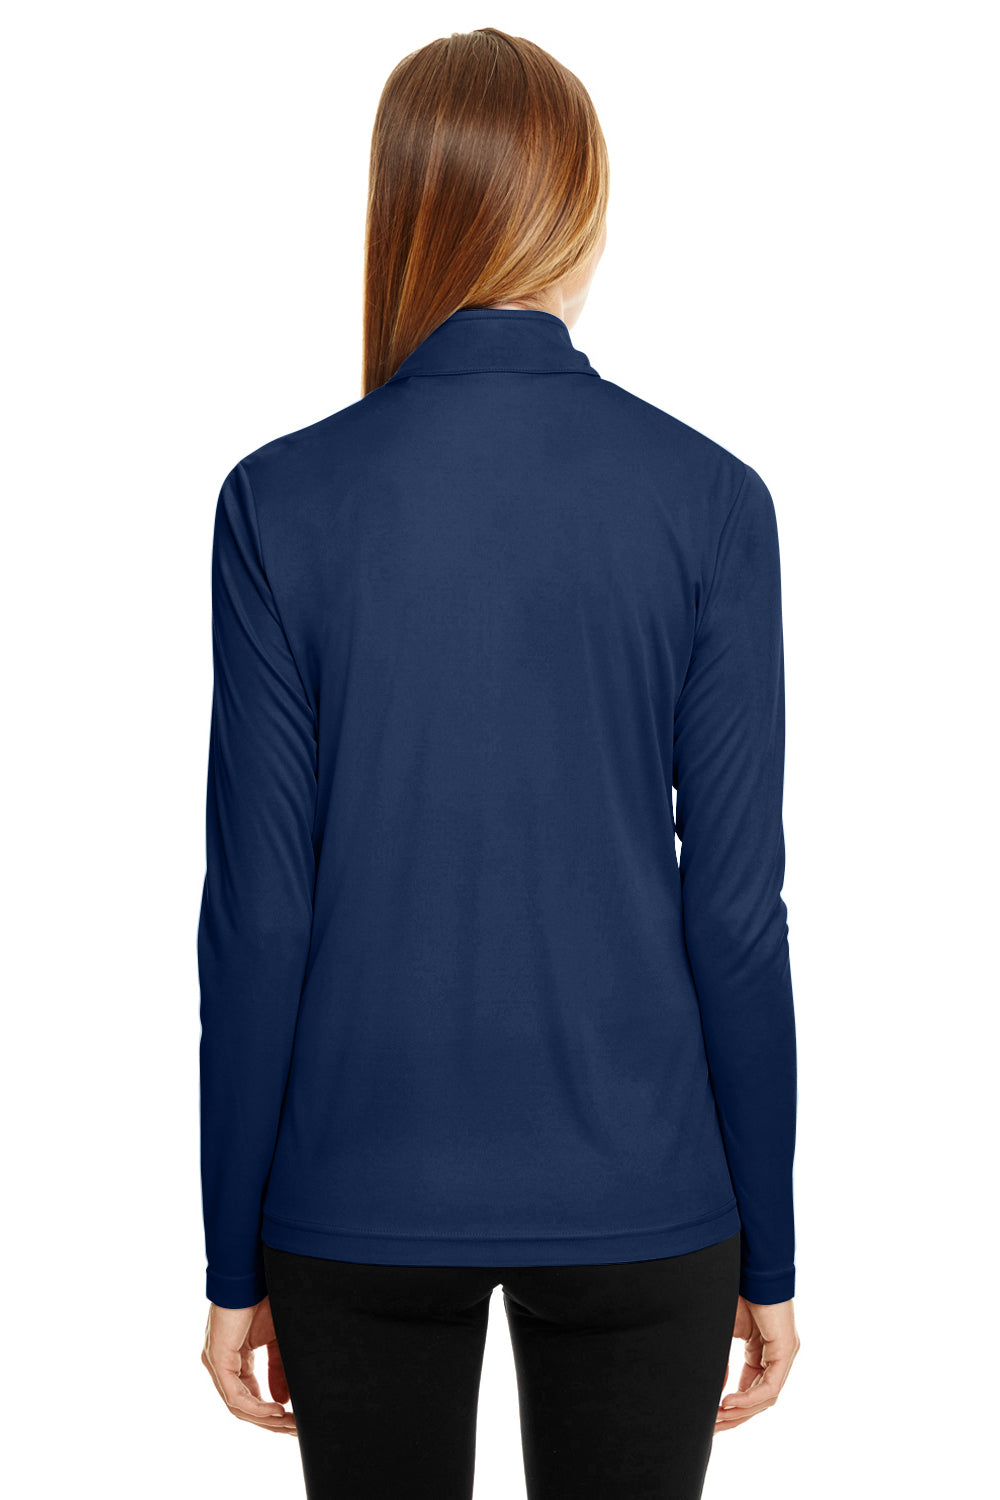 Team 365 TT31W Womens Zone Performance Moisture Wicking 1/4 Zip Sweatshirt Navy Blue Back